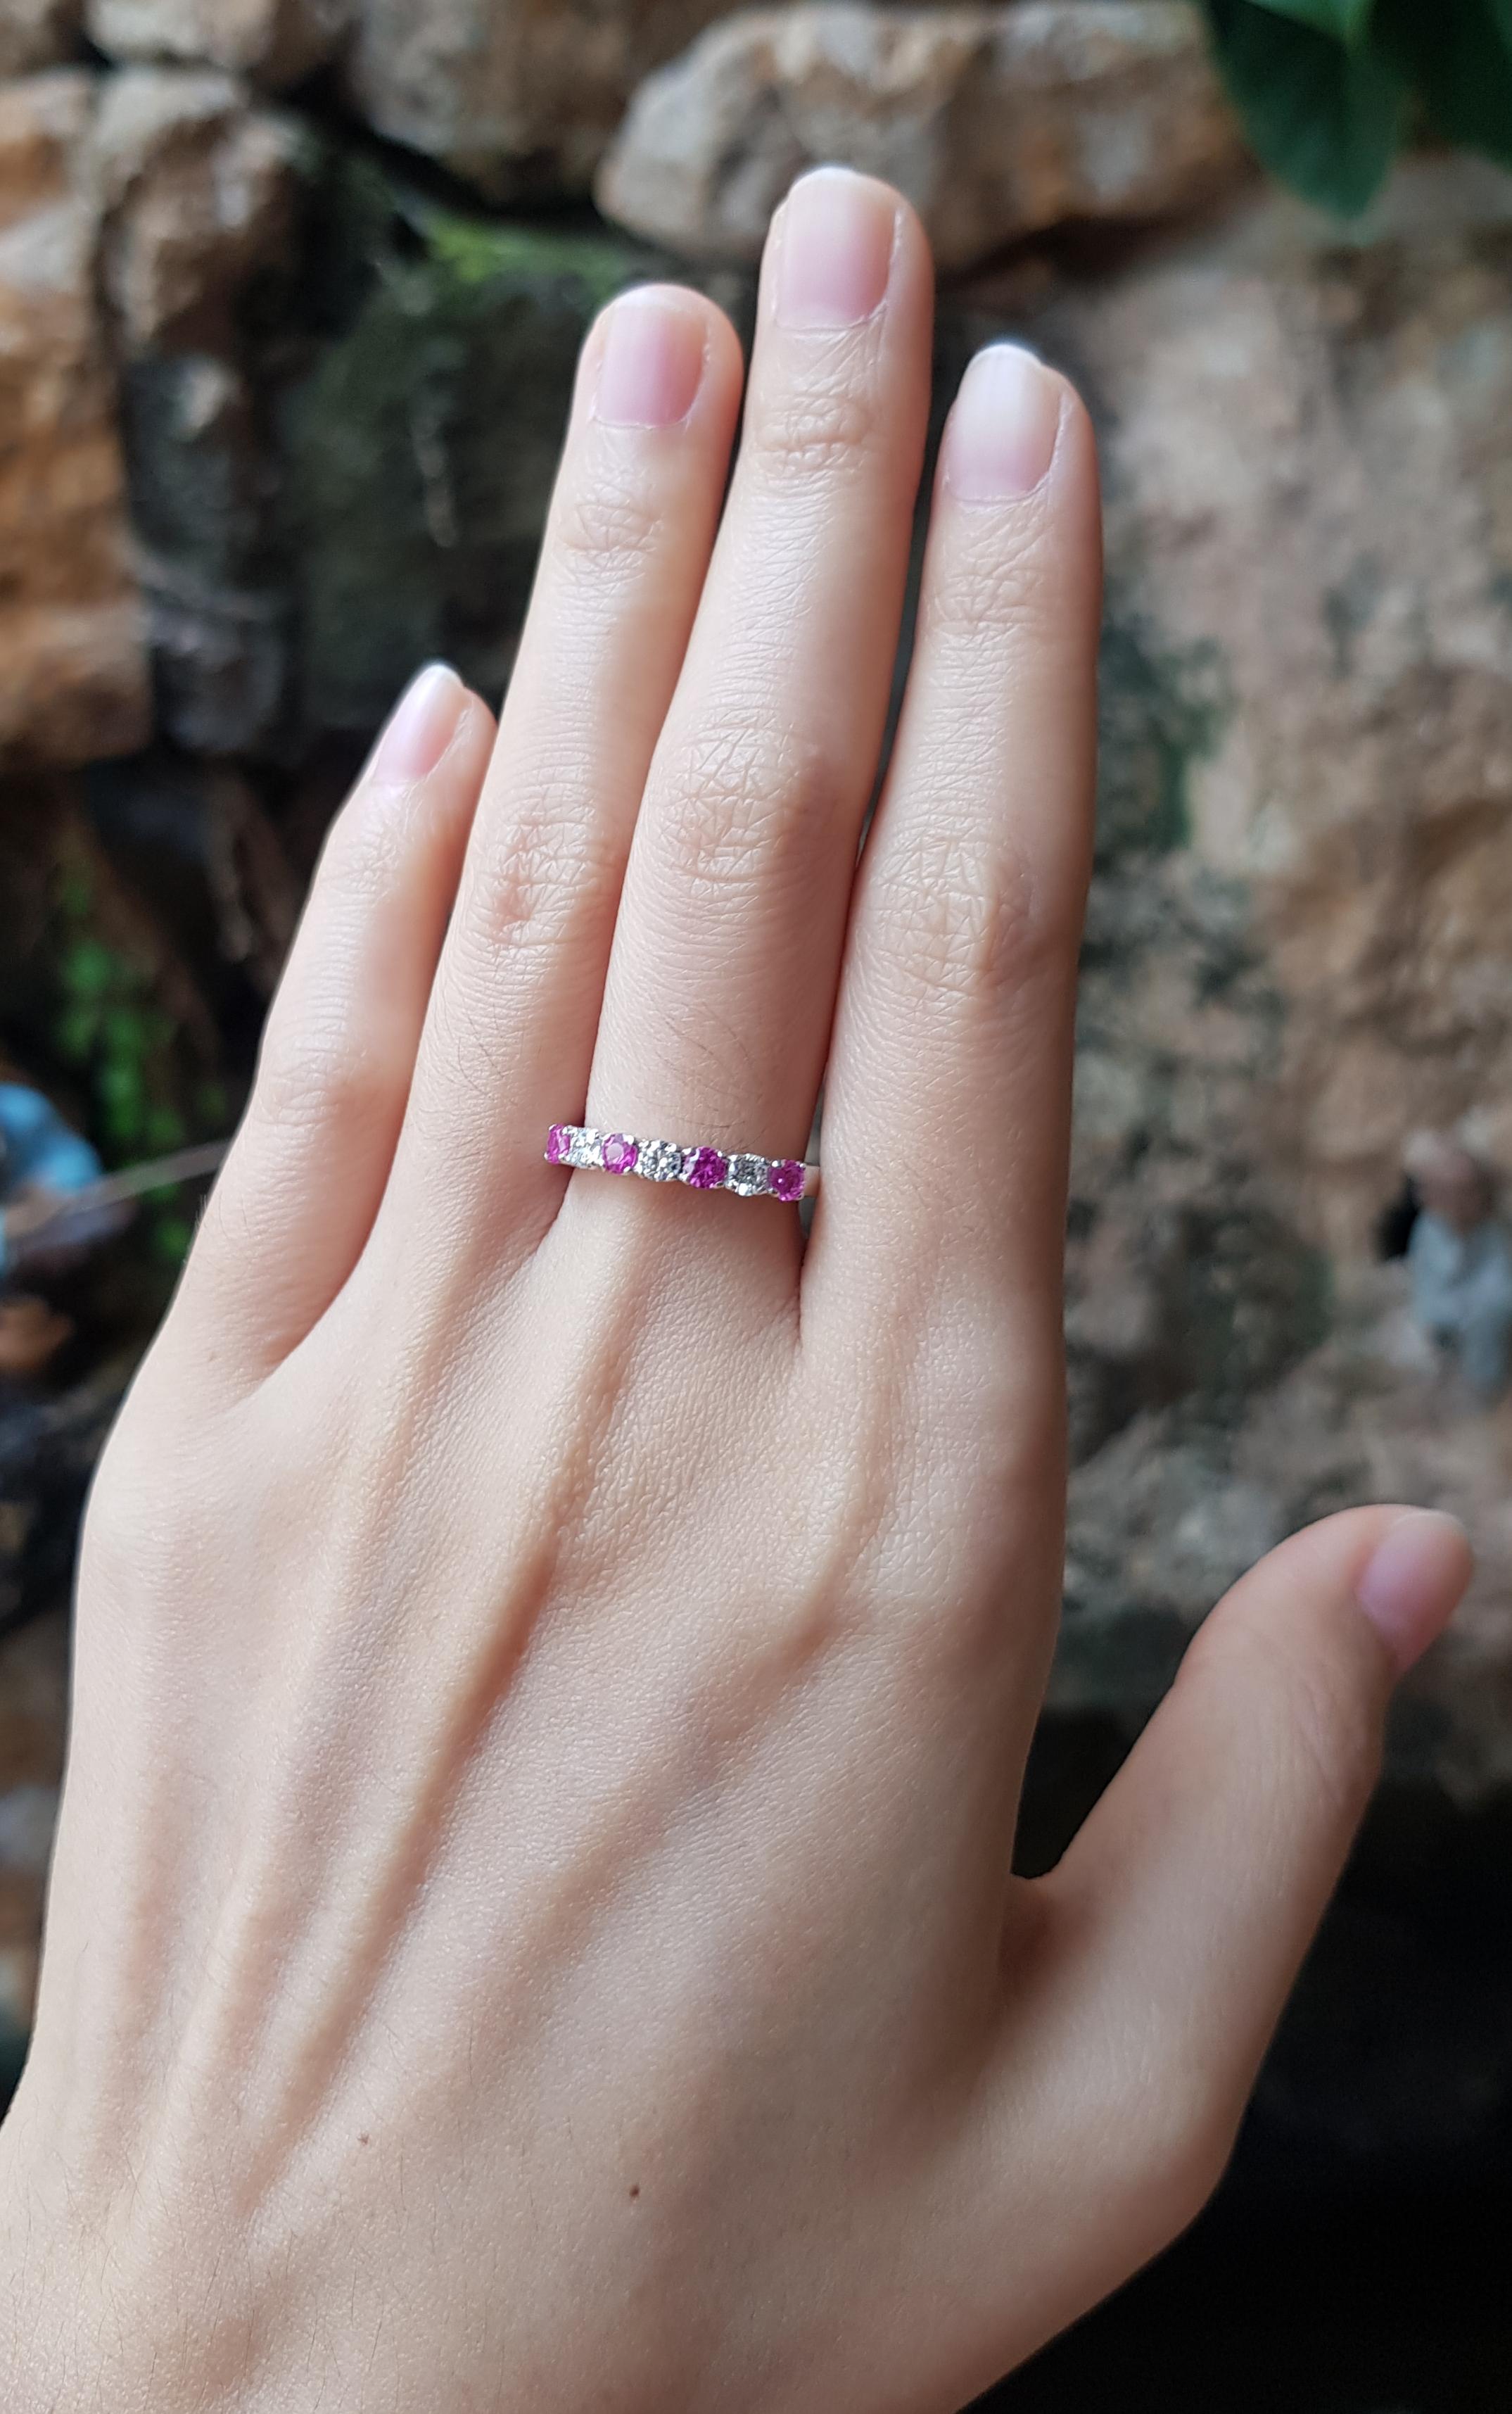 Pink Sapphire 0.42 carat with Diamond 0.26 carat Ring set in 18 Karat White Gold Settings

Width:  2.0 cm 
Length: 0.3 cm
Ring Size: 54
Total Weight: 2.82 grams

